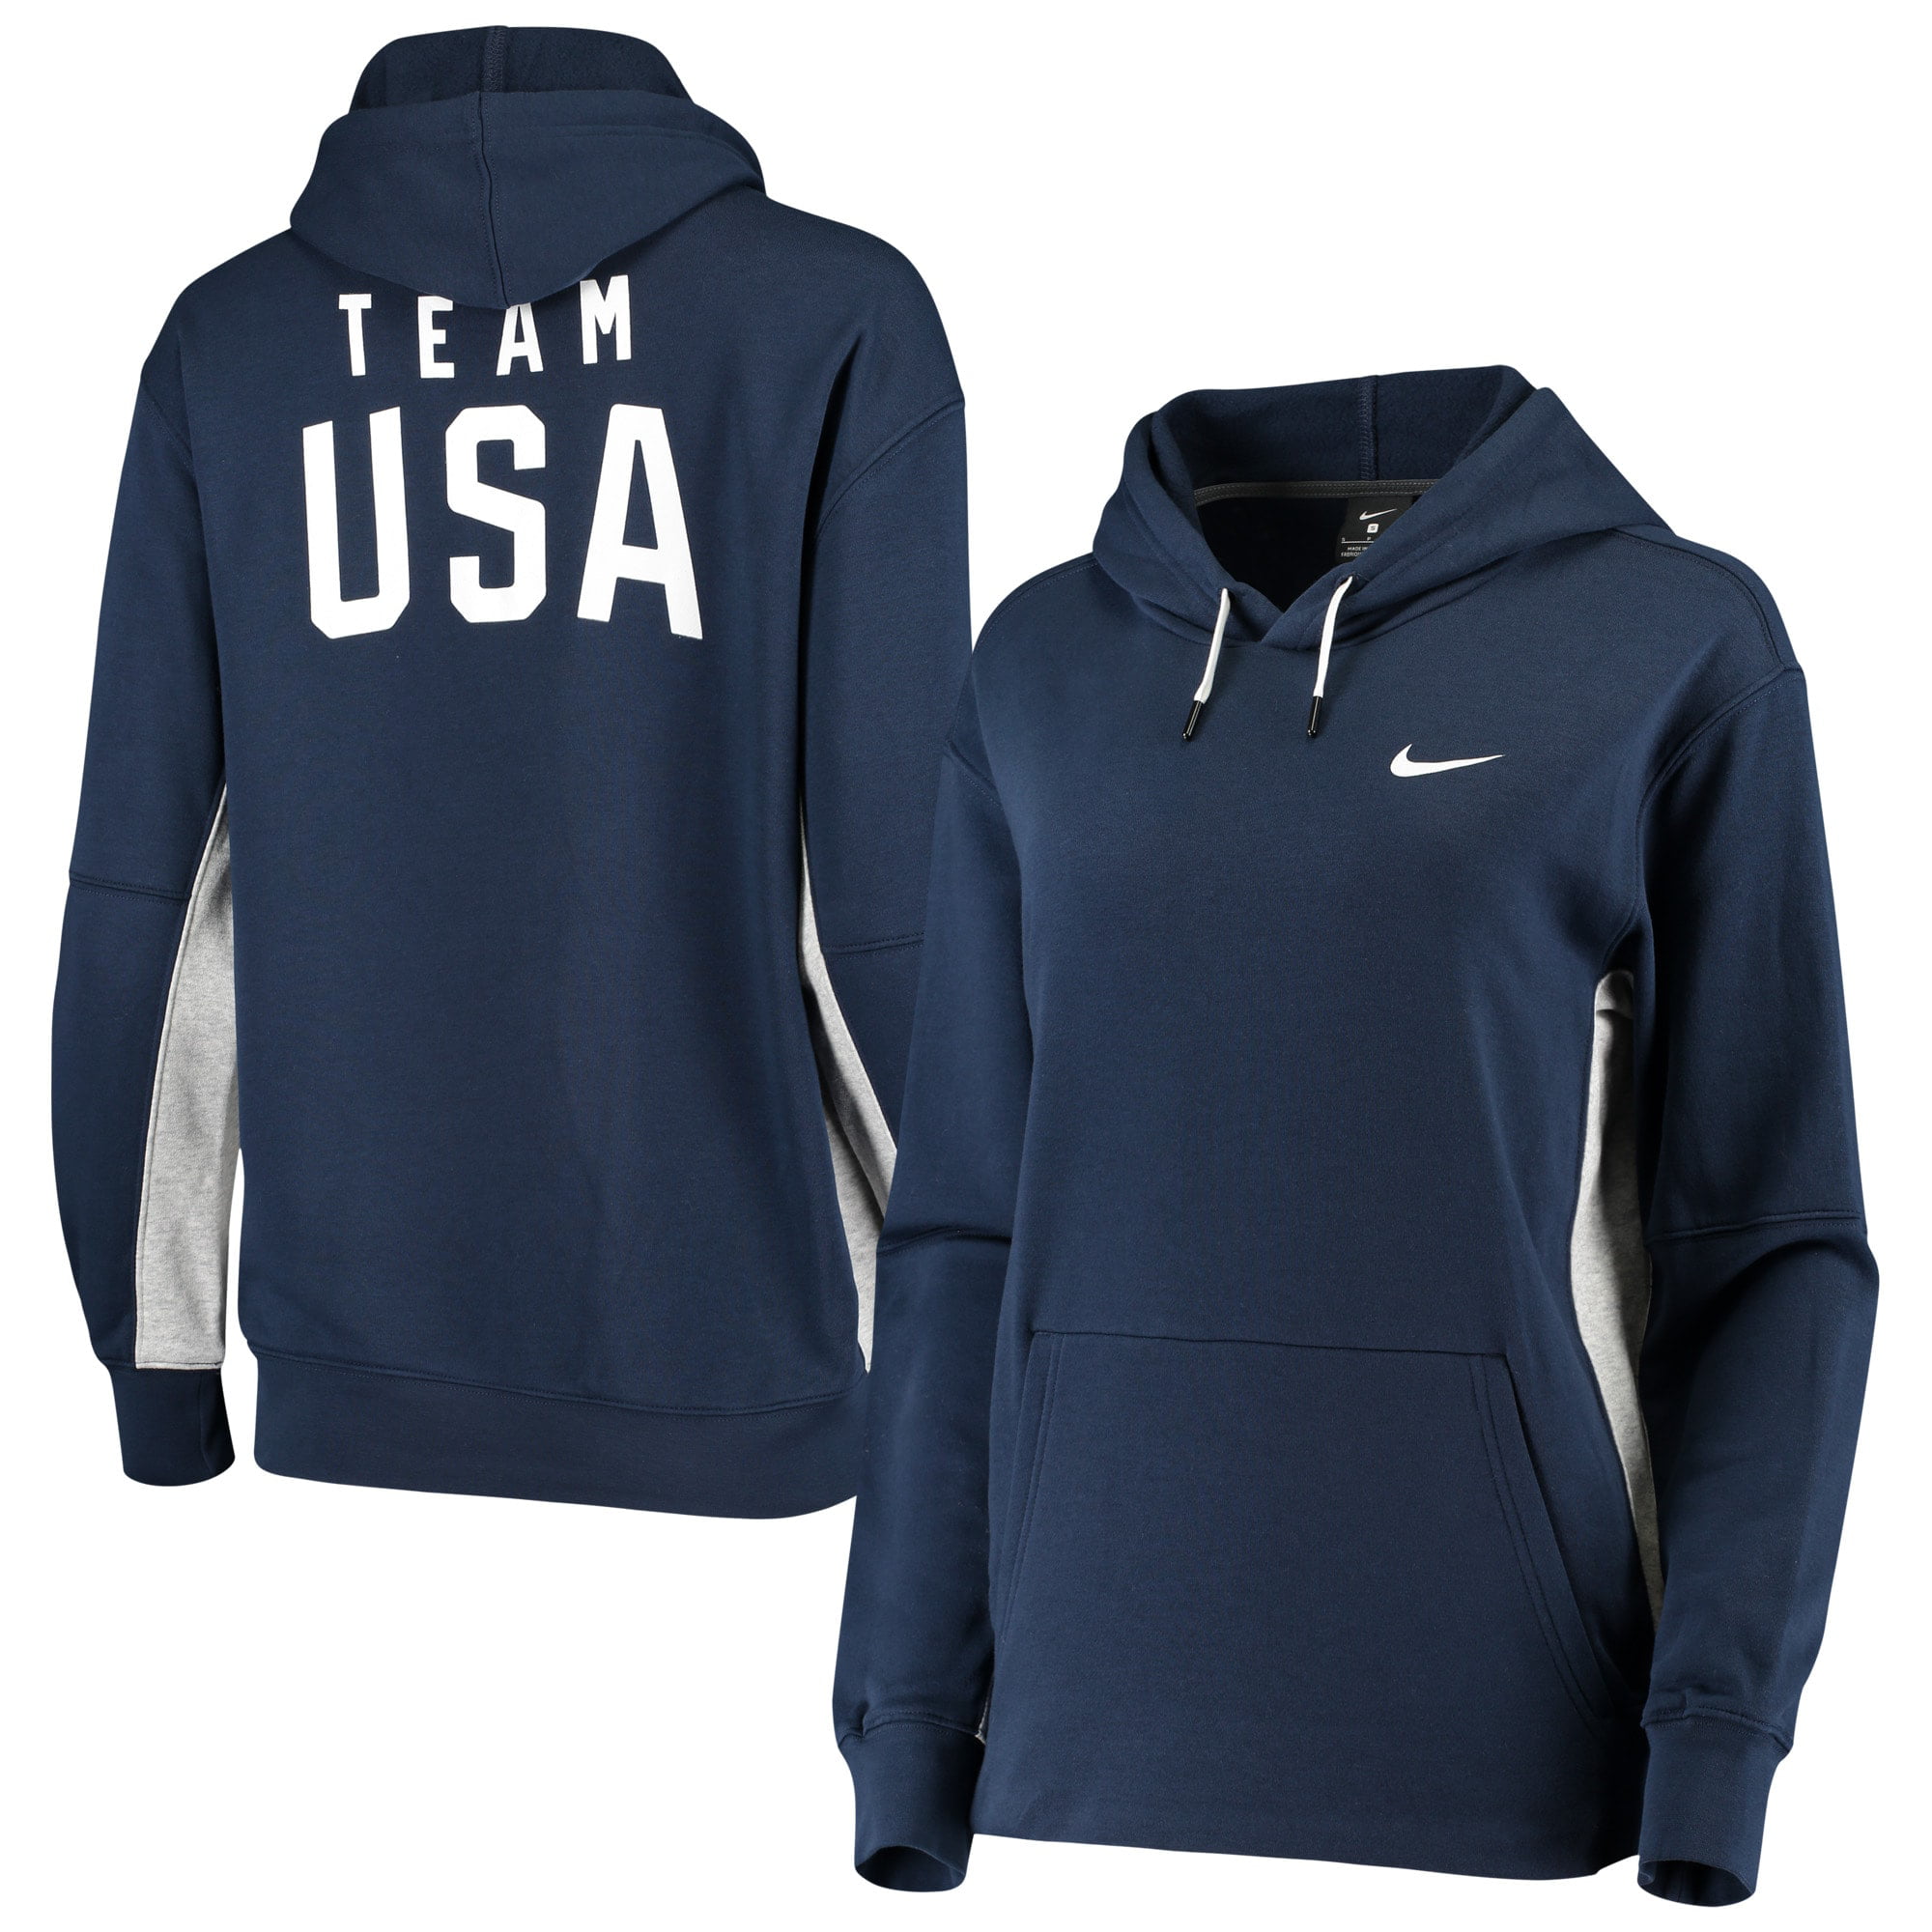  Nike  Team  USA Nike  Women s Fleece Pullover Hoodie  Navy 